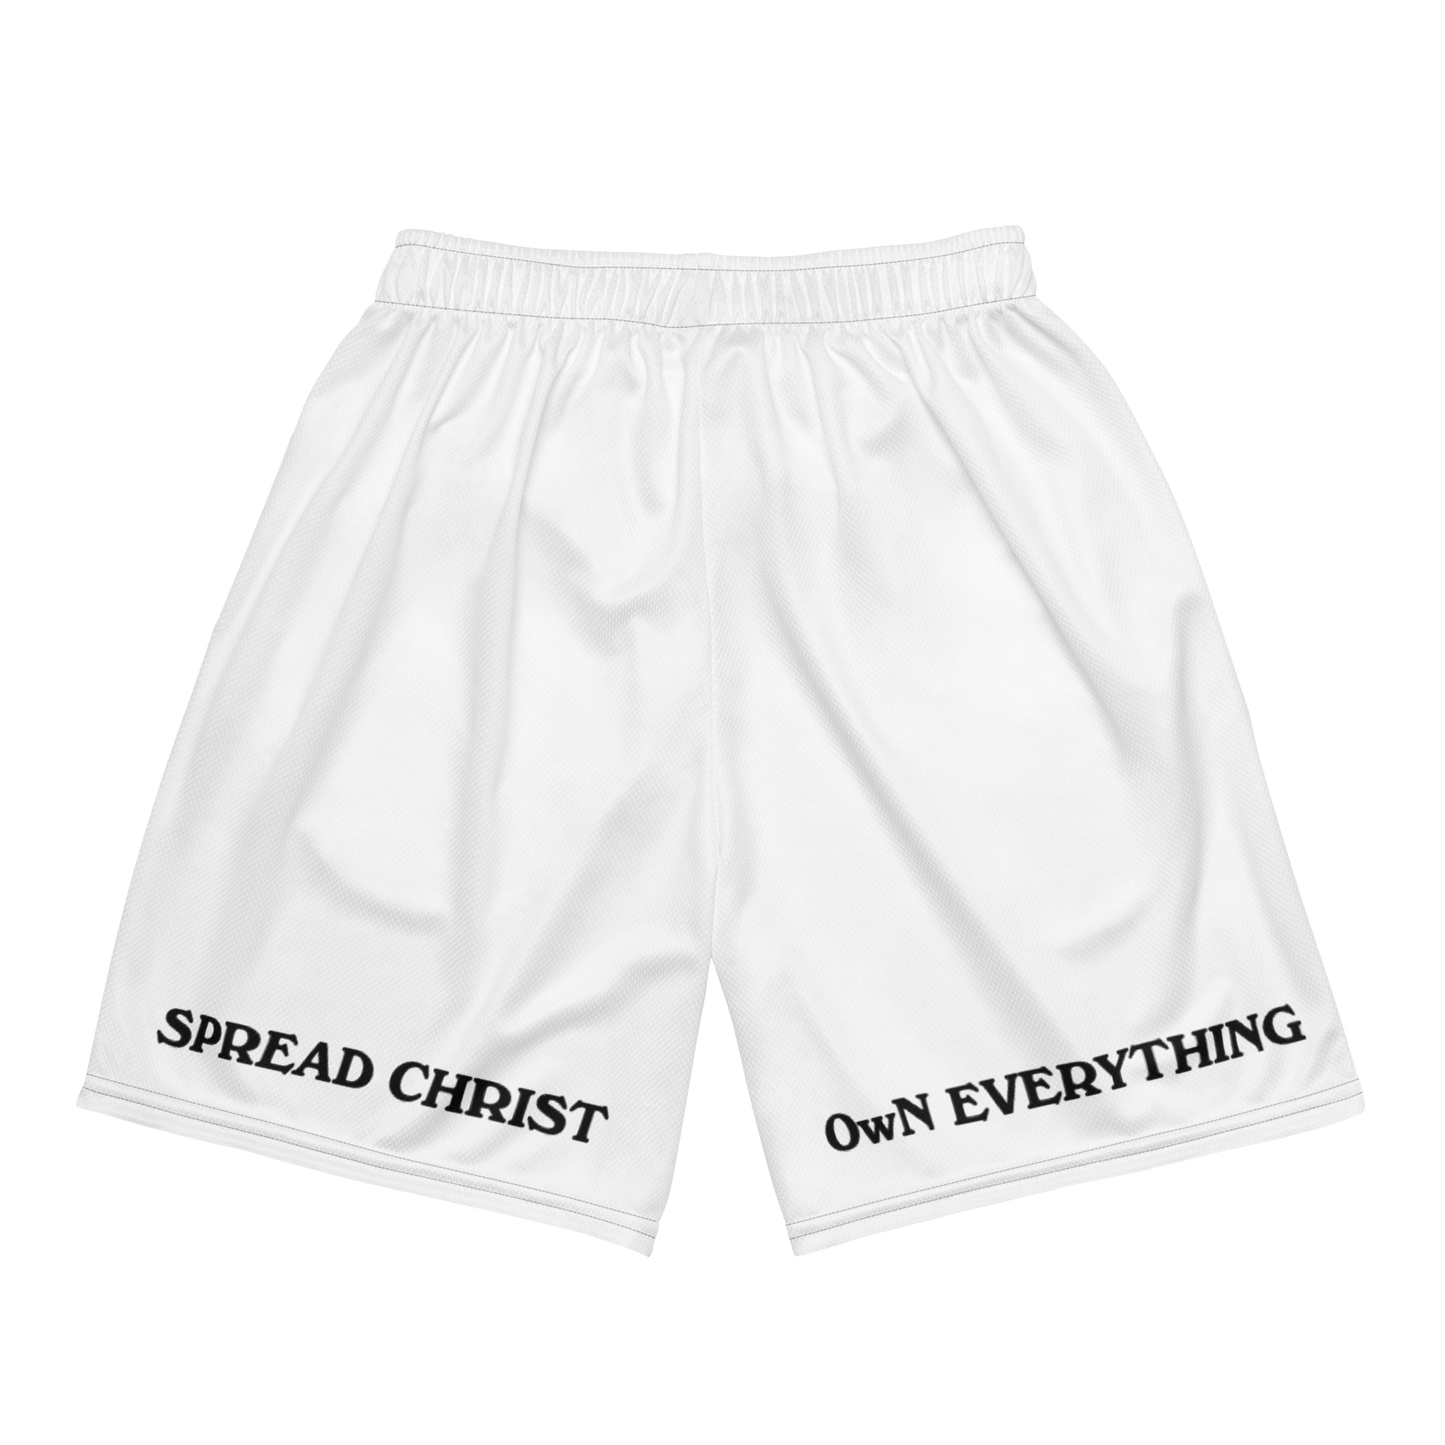 {Spread Christ Own Everything} "Monochrome" Mesh Shorts